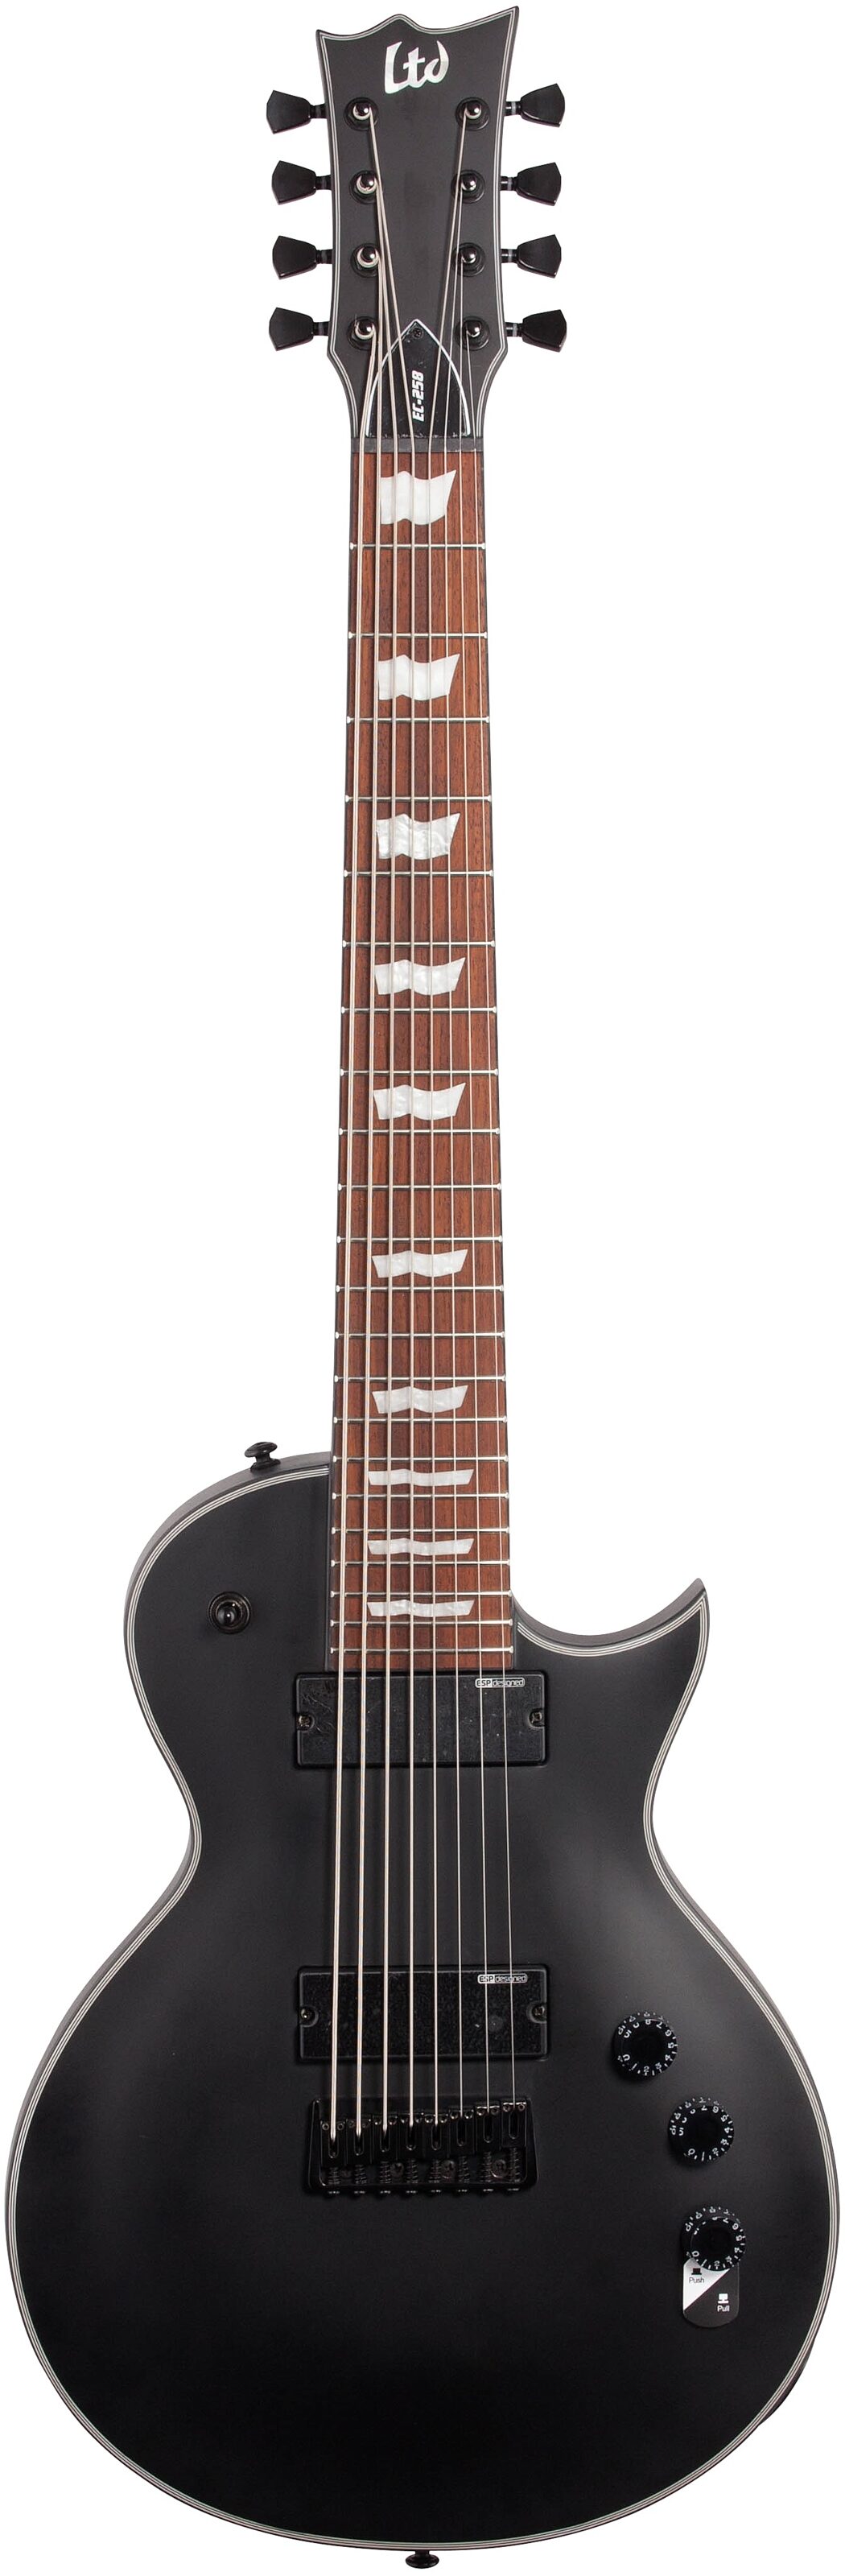 ESP LTD Eclipse EC-258 Electric Guitar, 8-String